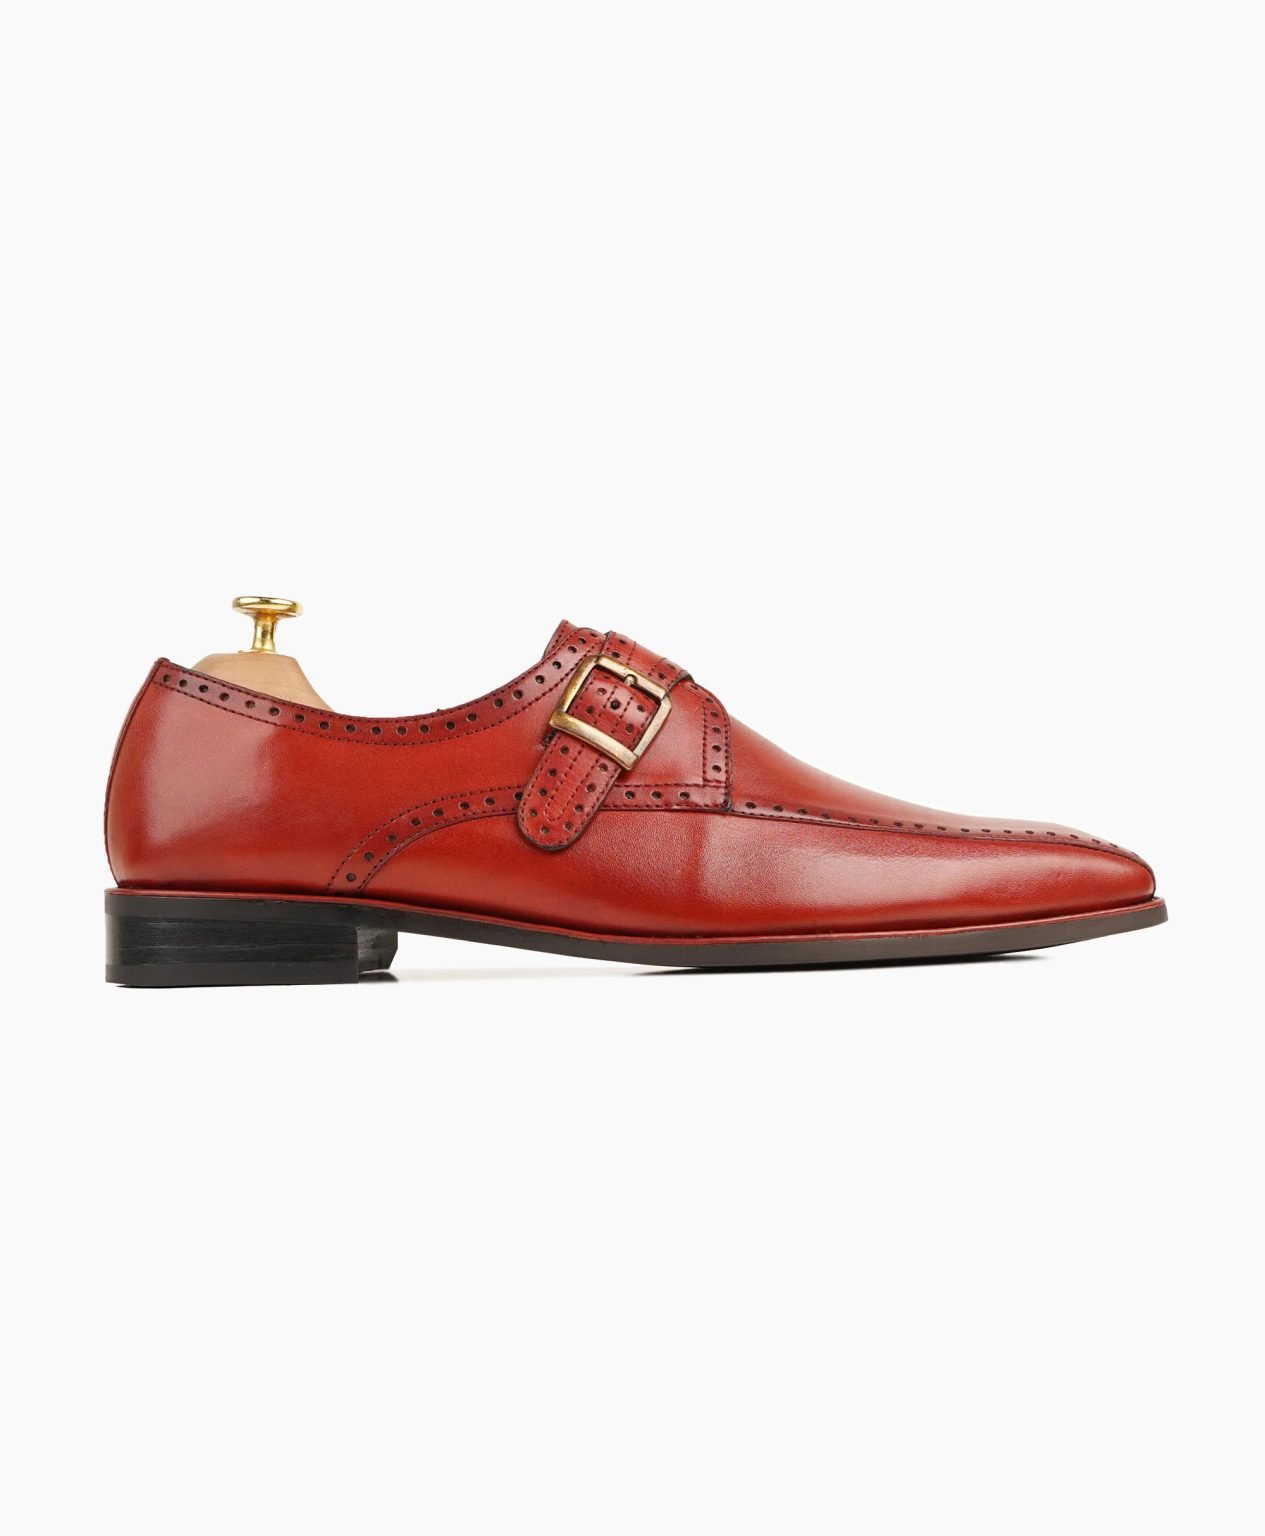 ashburton-single-monkstrap-red-leather-shoes-image201